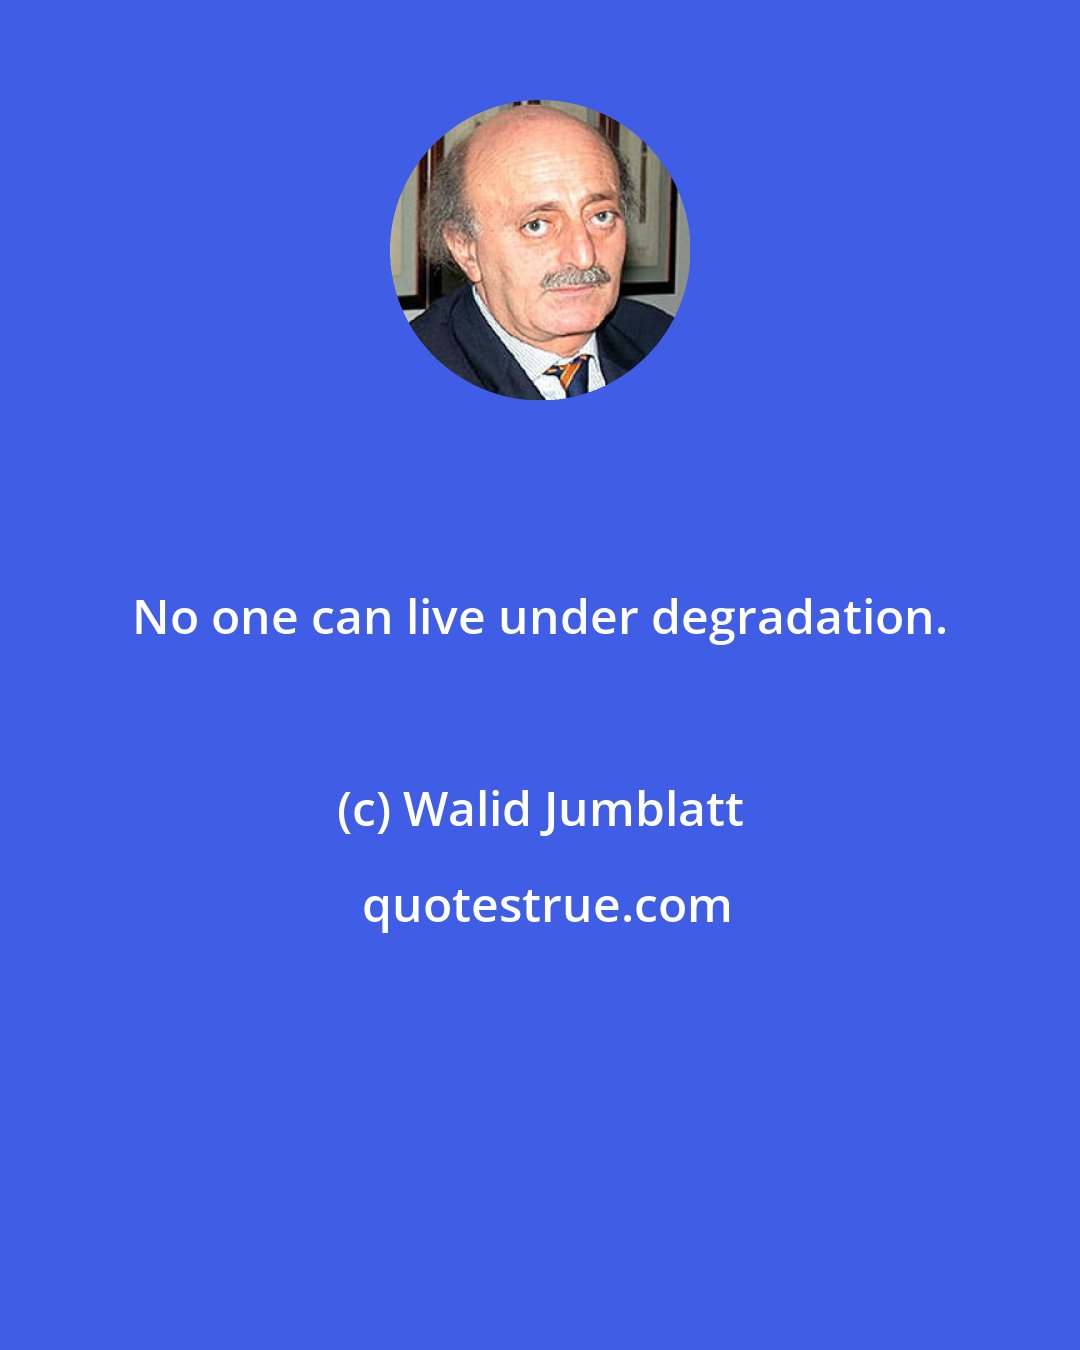 Walid Jumblatt: No one can live under degradation.